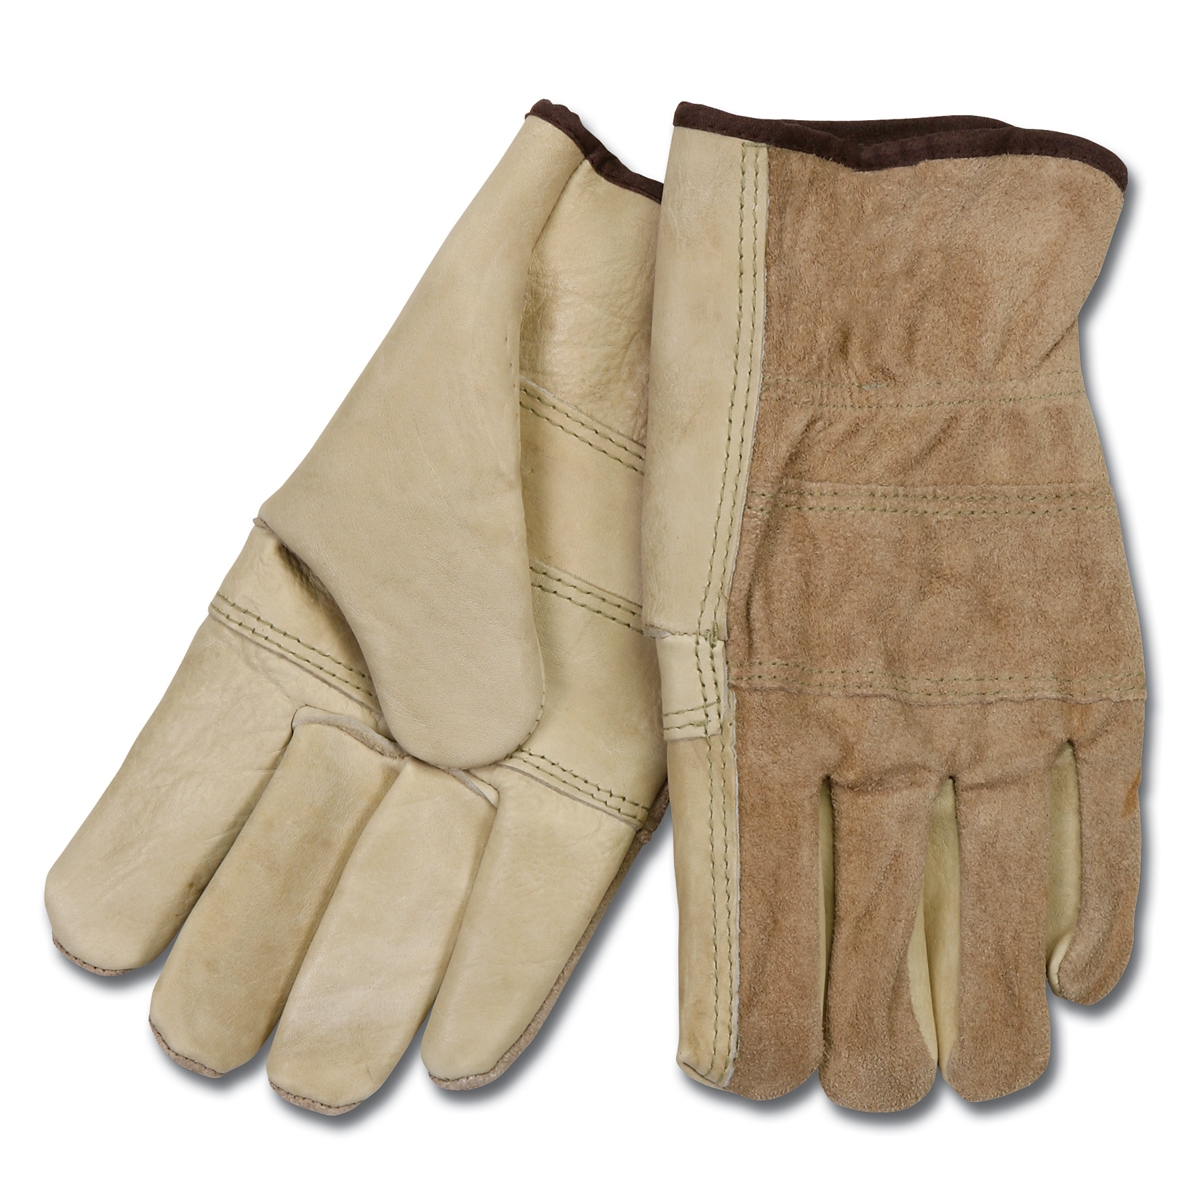 industrial safety gloves